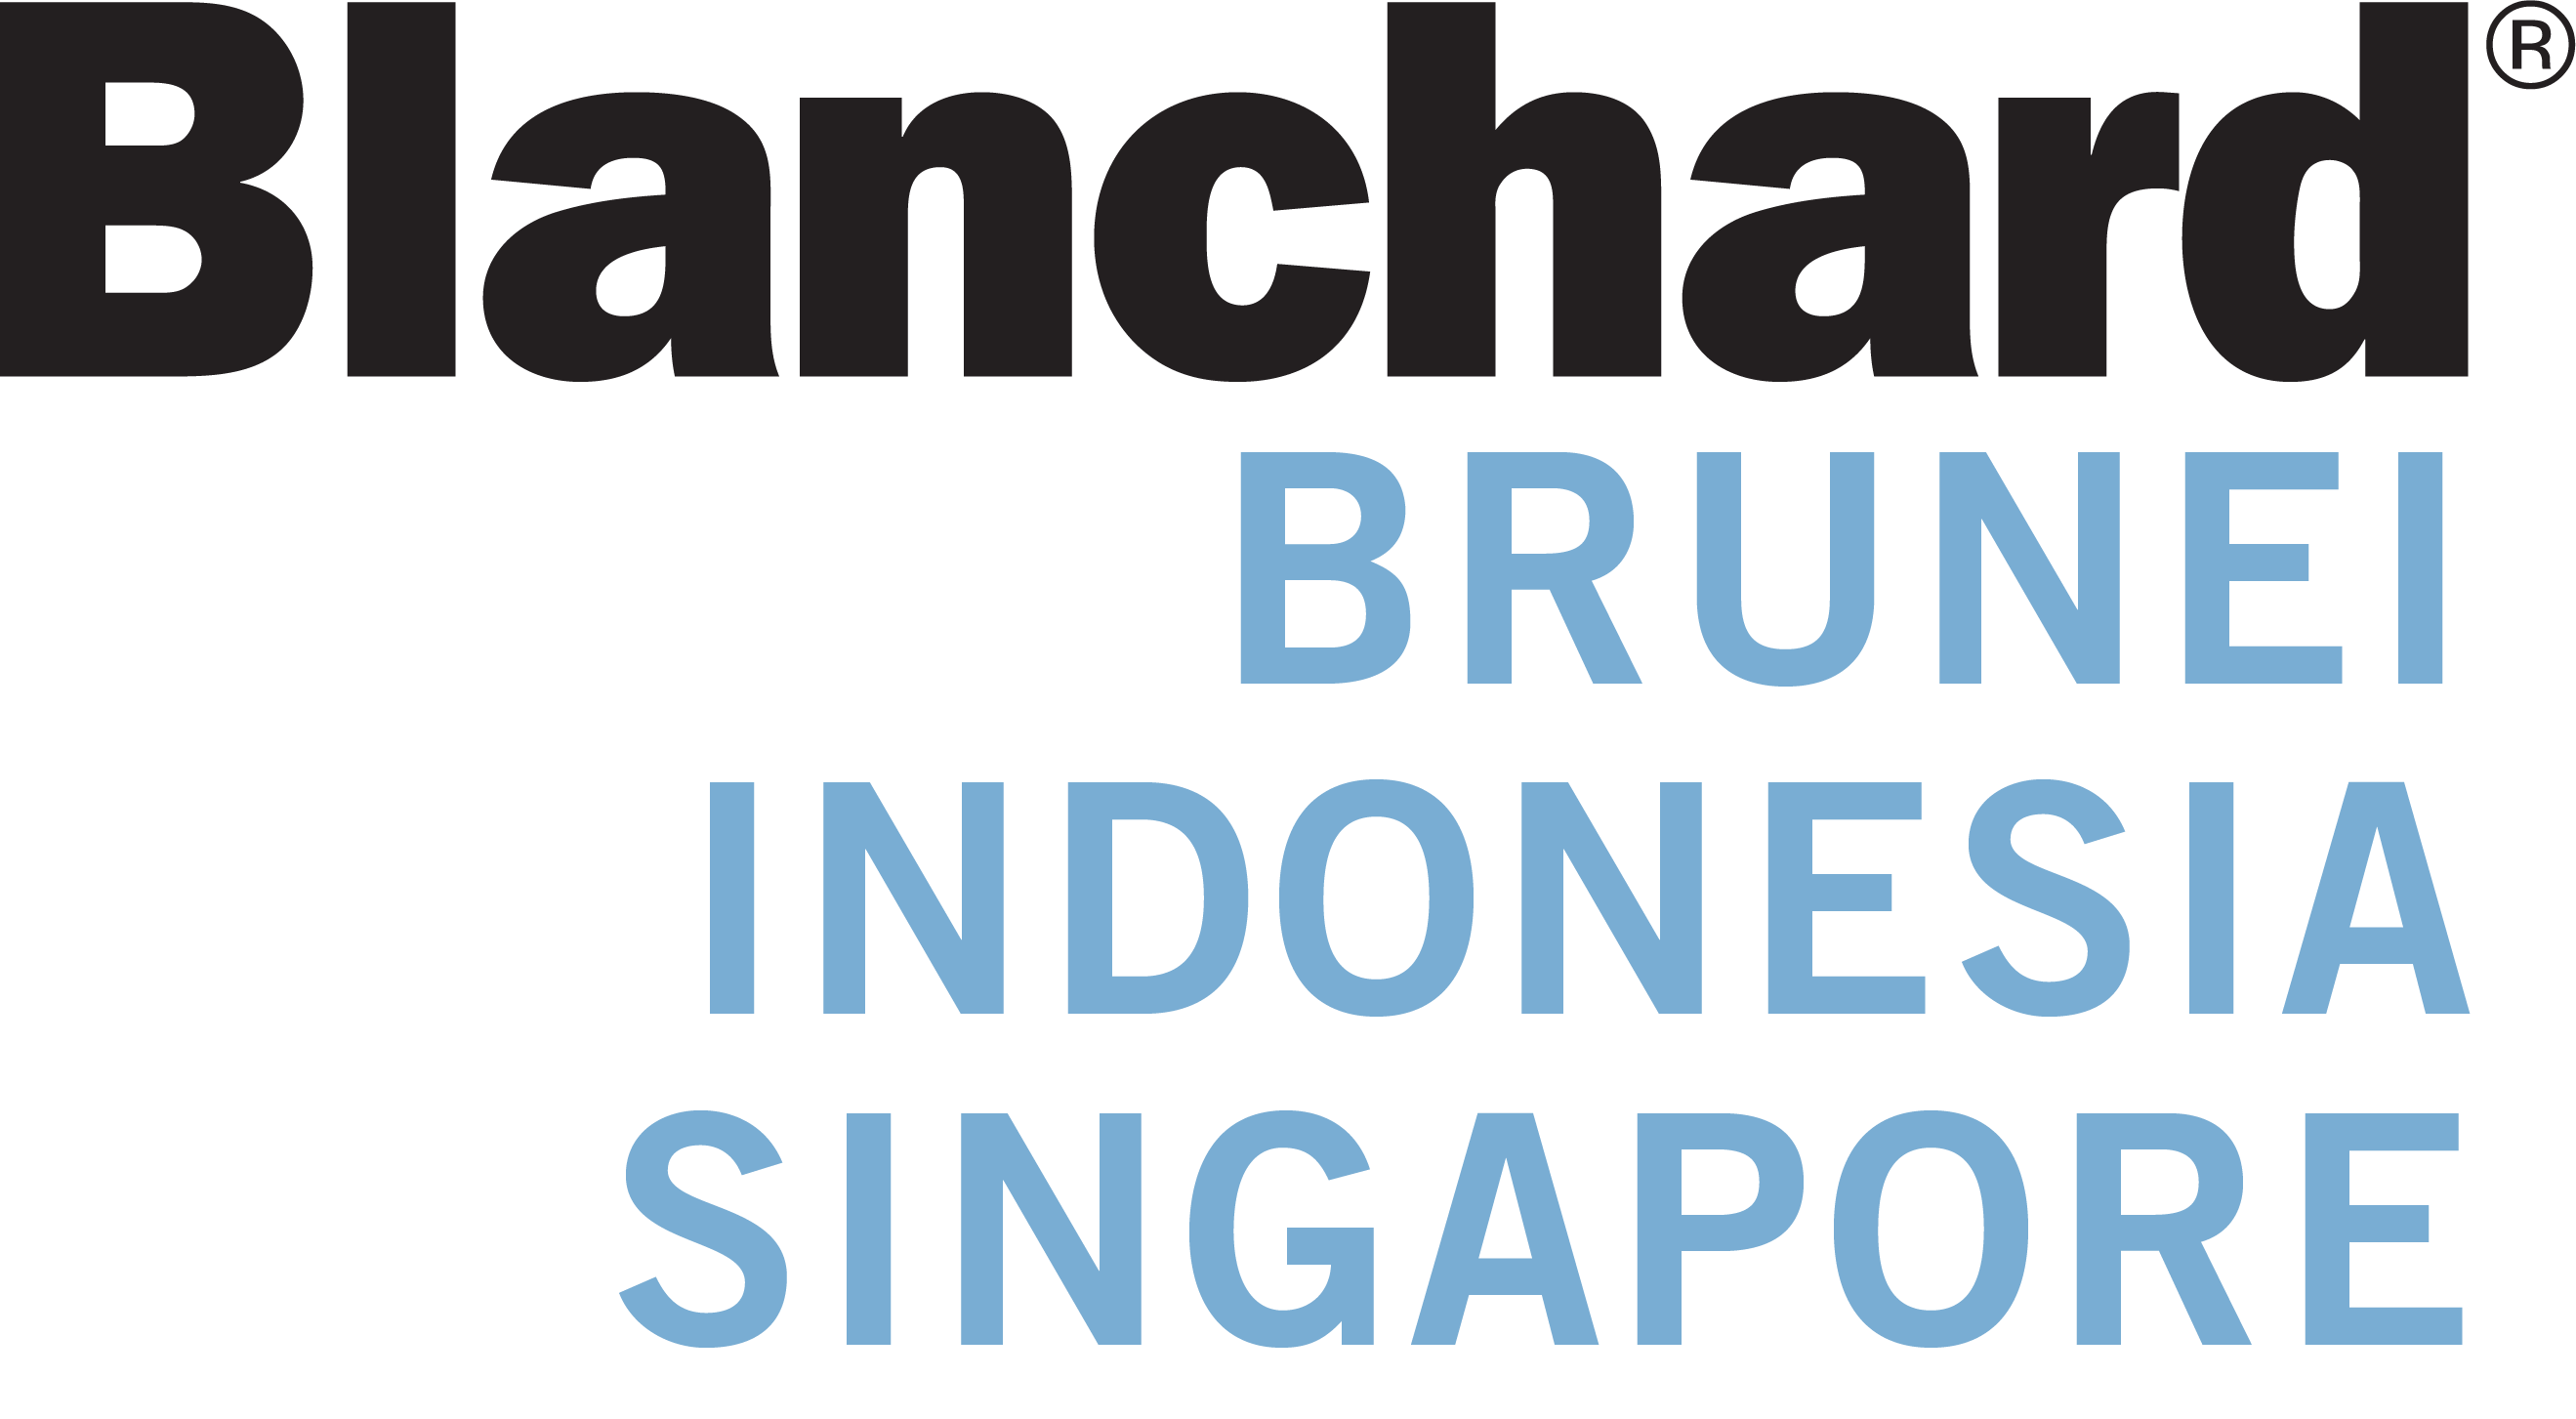 Blanchard Singapore